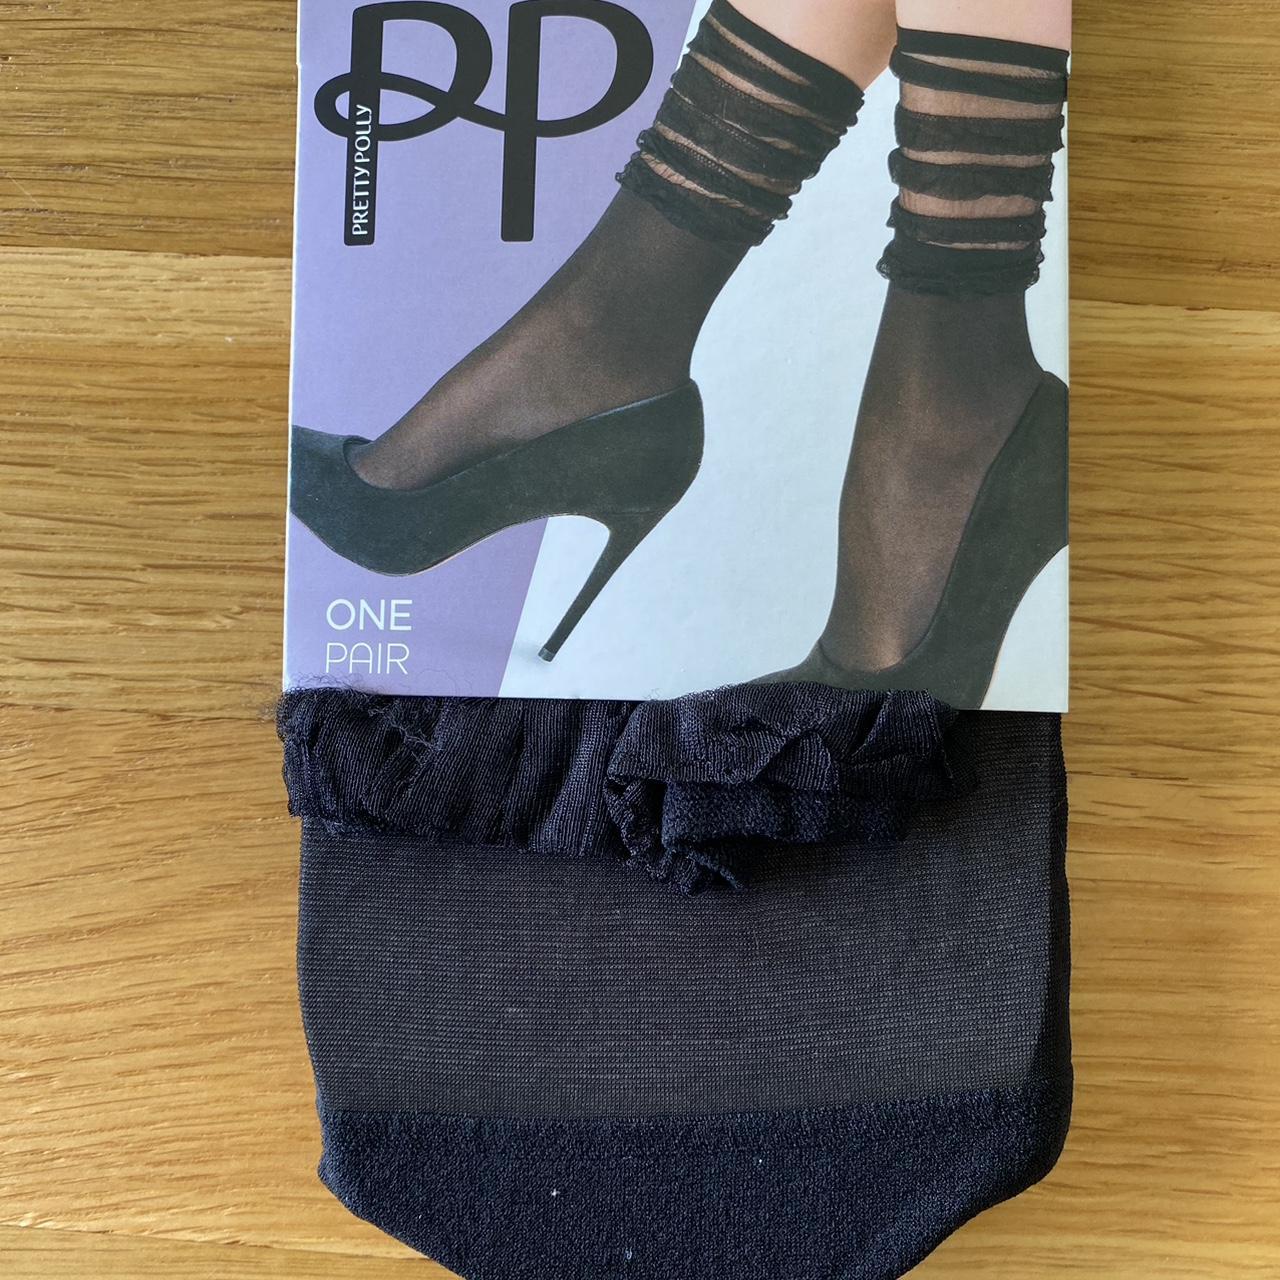 Pretty Polly anklet socks. Brand new #socks #anklets... - Depop